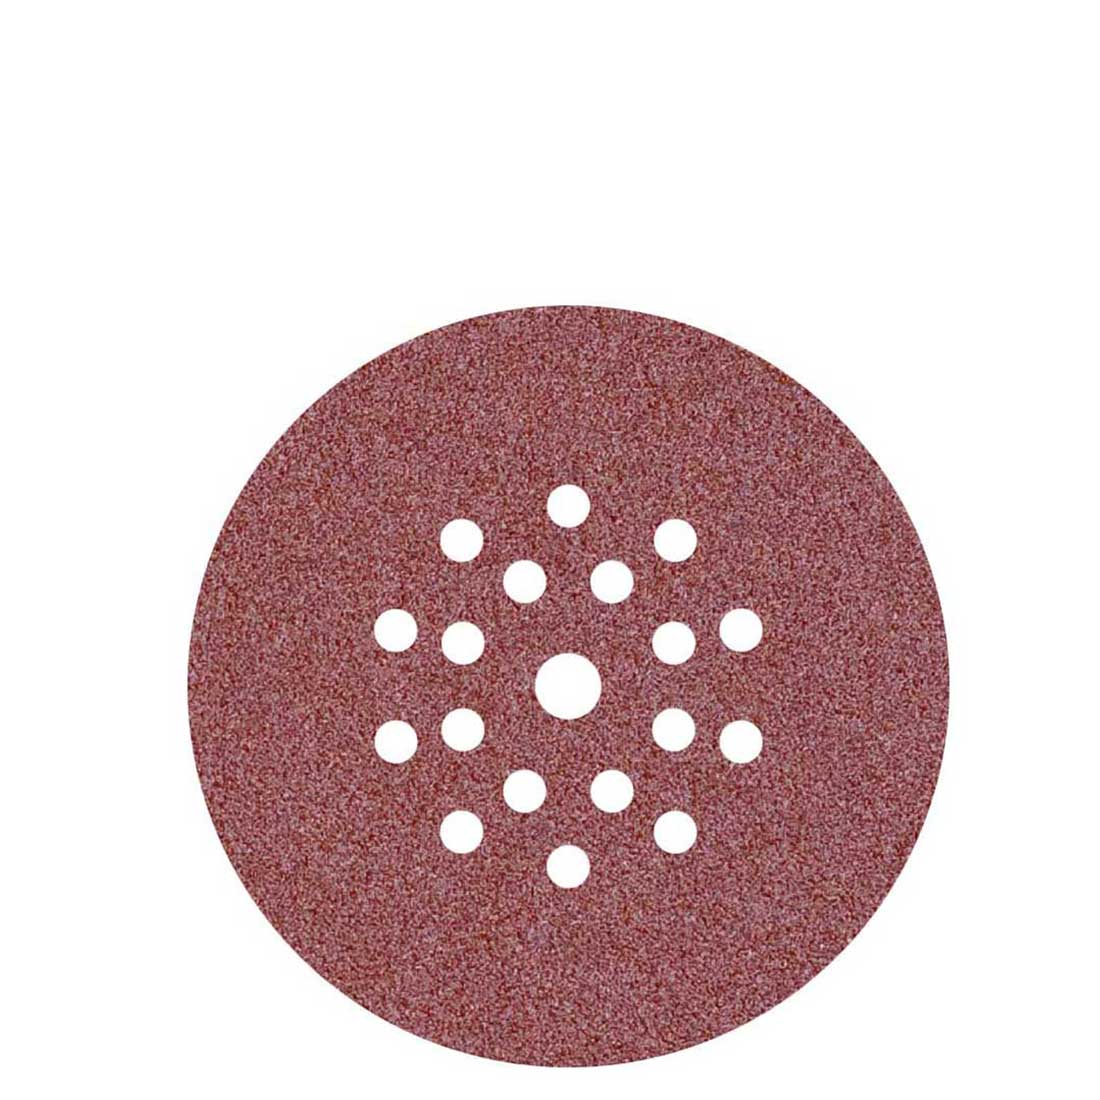 MioTools hook & loop sanding discs for drywall sanders, G16–240, Ø 225 mm / 19 hole / aluminium oxide